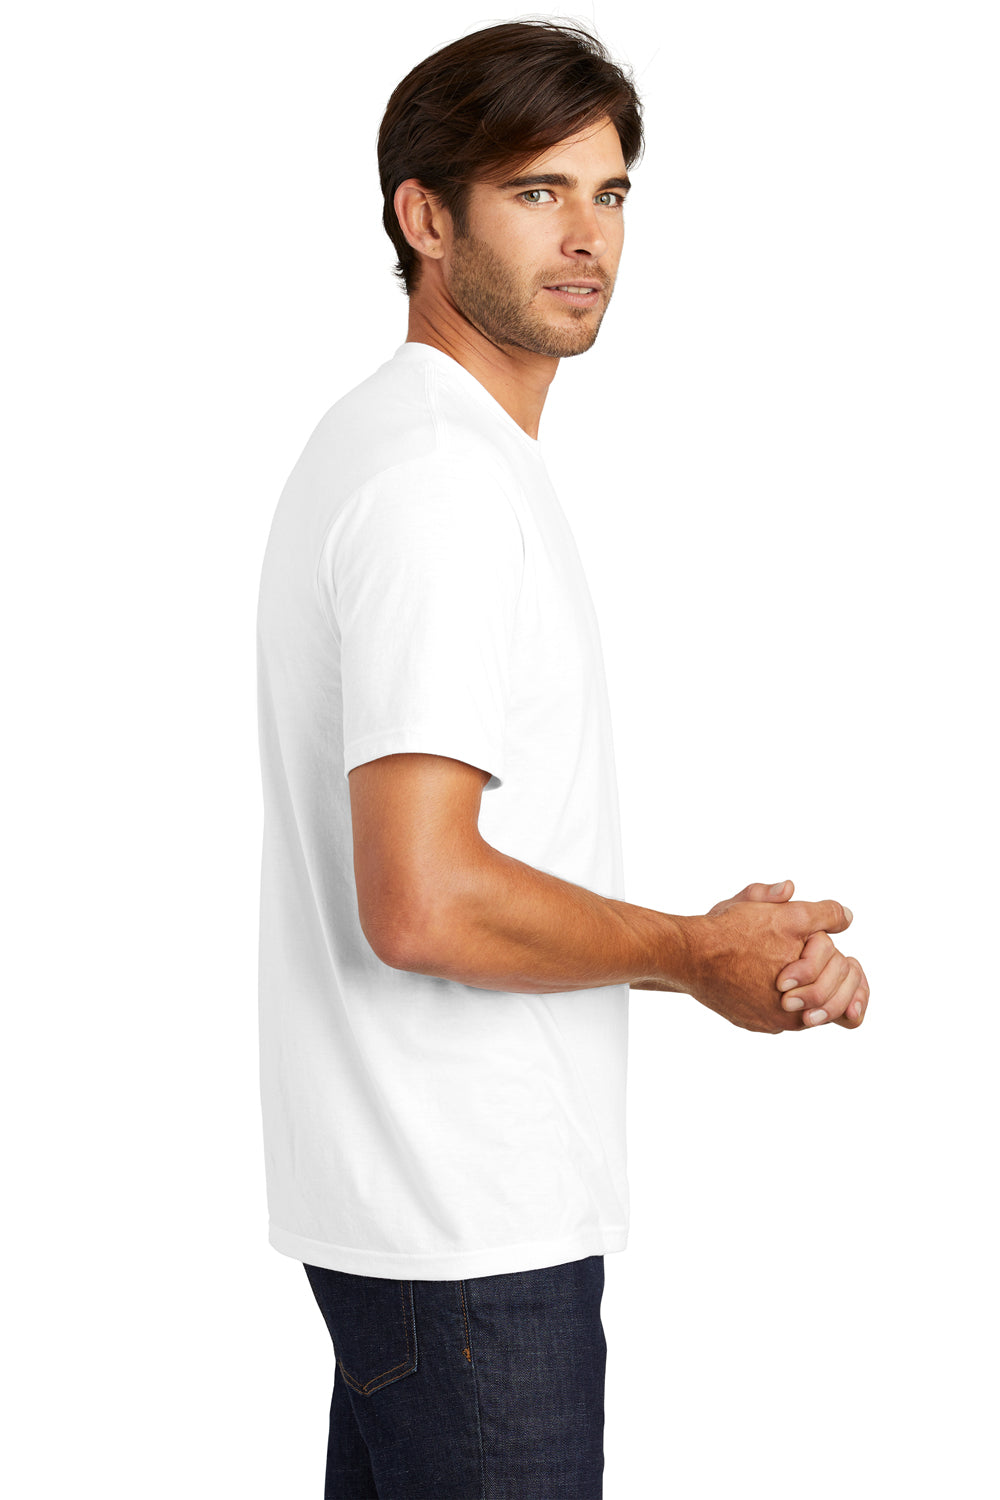 District DM130 Mens Perfect Tri Short Sleeve Crewneck T-Shirt White Side